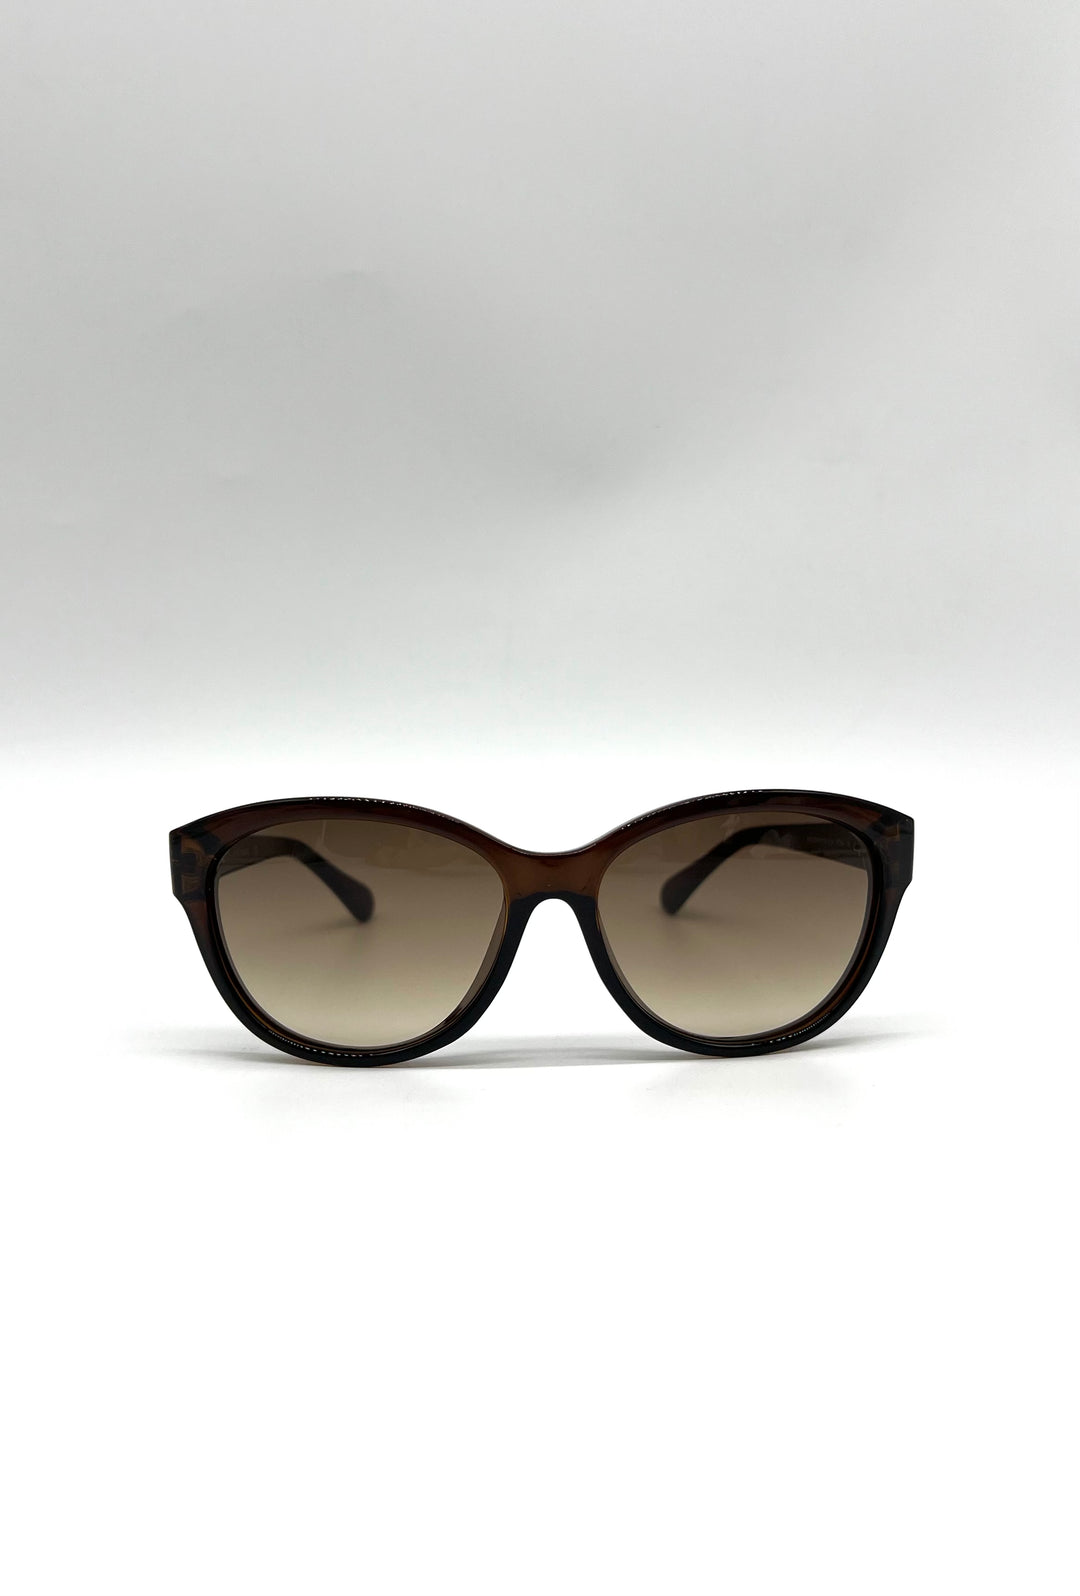 Diane von Furstenberg Sunglasses KATE DVF 611S 210 Clear Brown with Brown Lenses